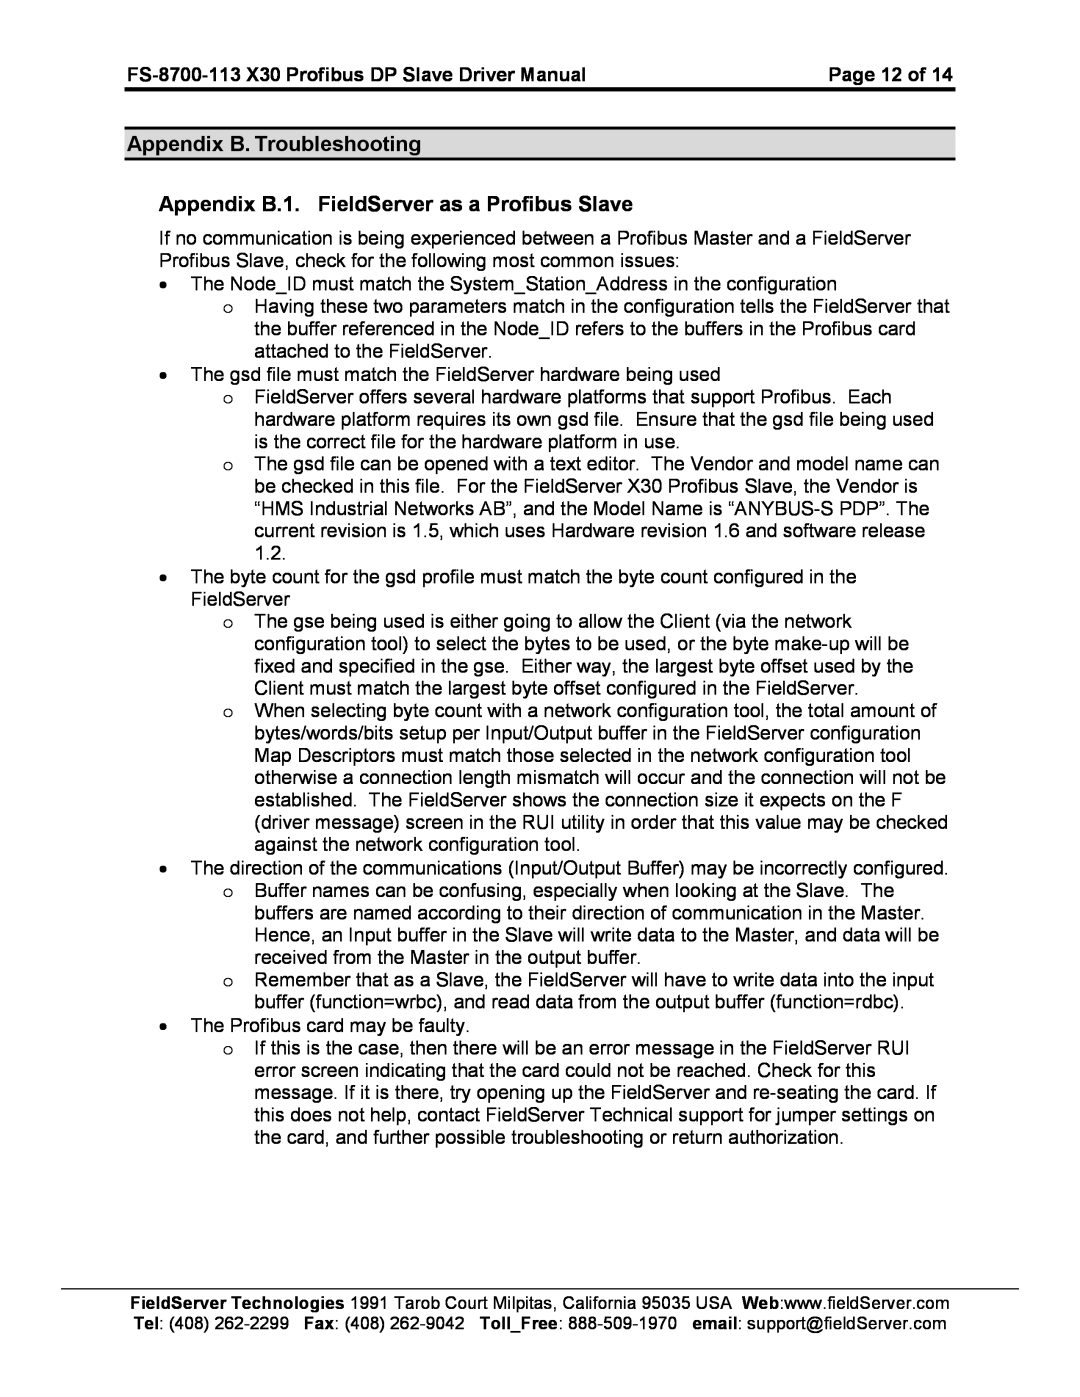 FieldServer FS-8700-113 instruction manual Appendix B. Troubleshooting, Appendix B.1. FieldServer as a Profibus Slave 